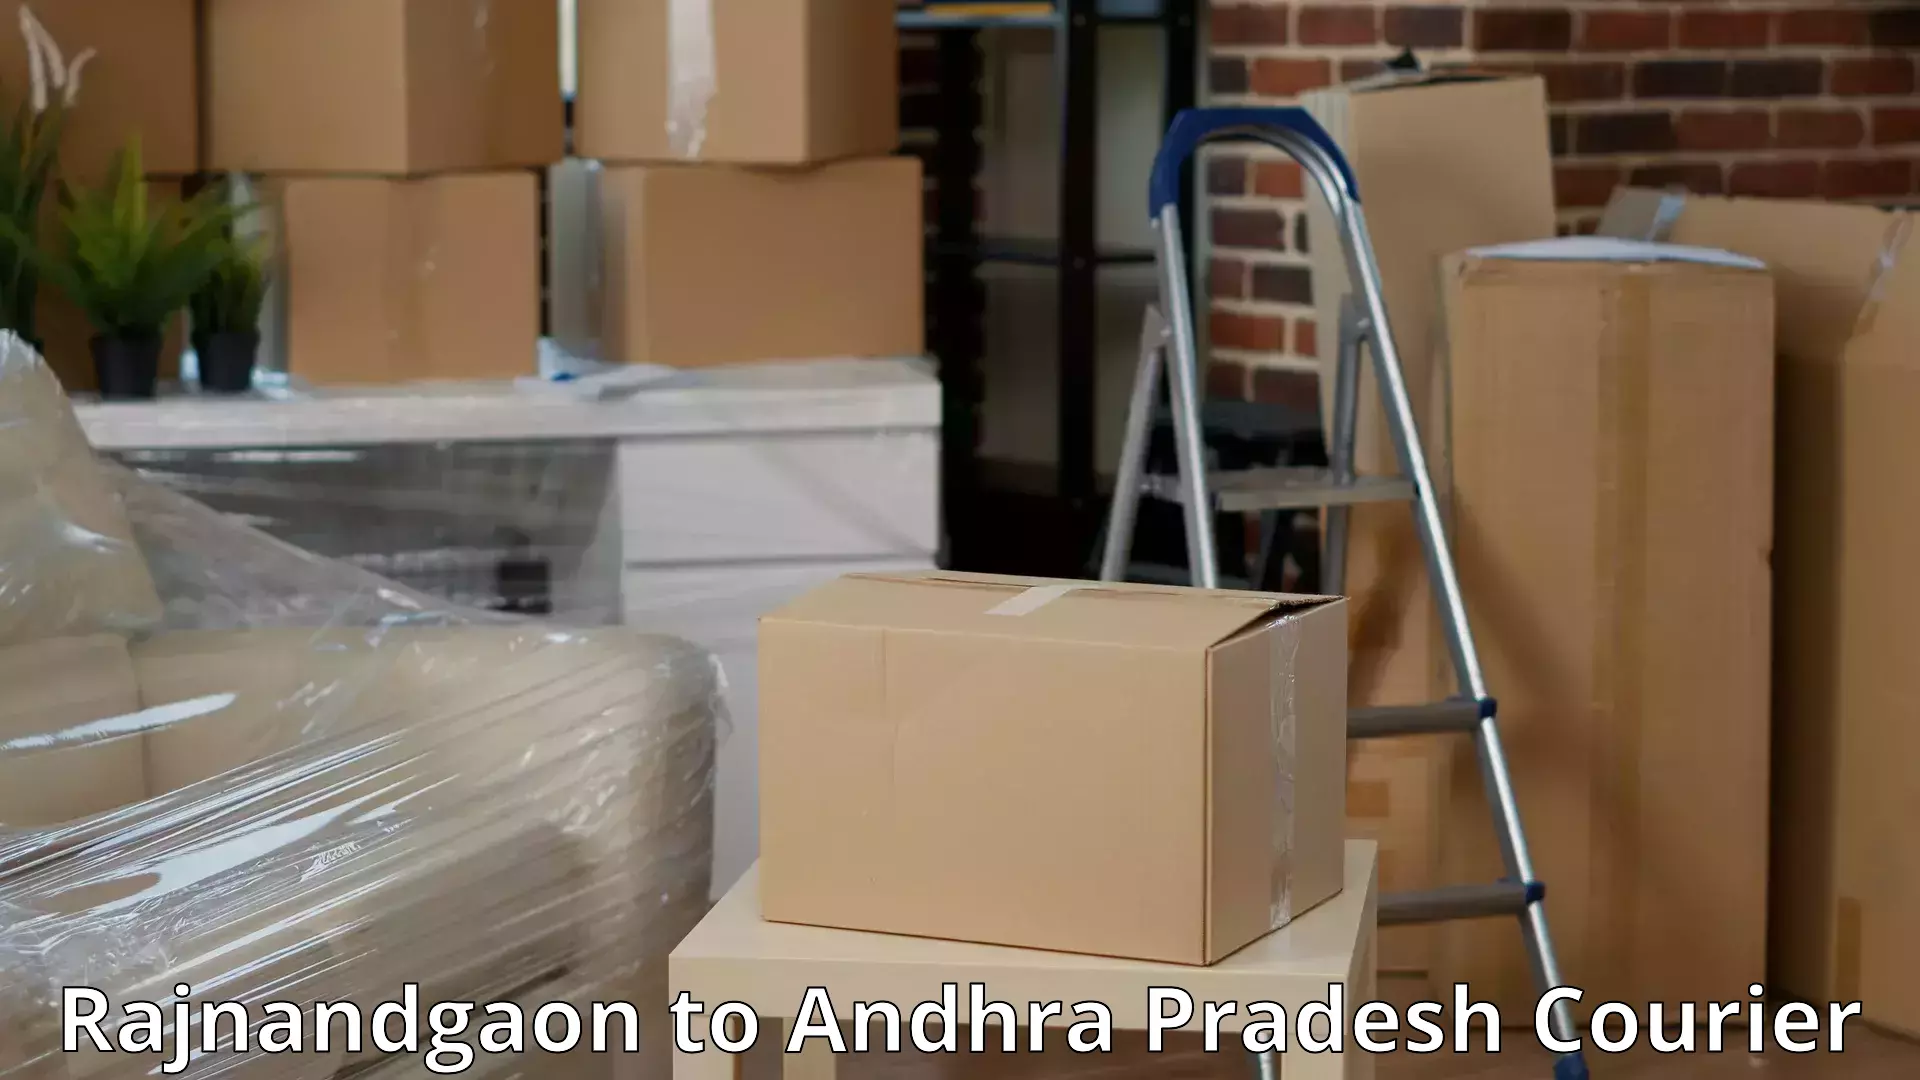 Efficient moving company Rajnandgaon to Devarapalli